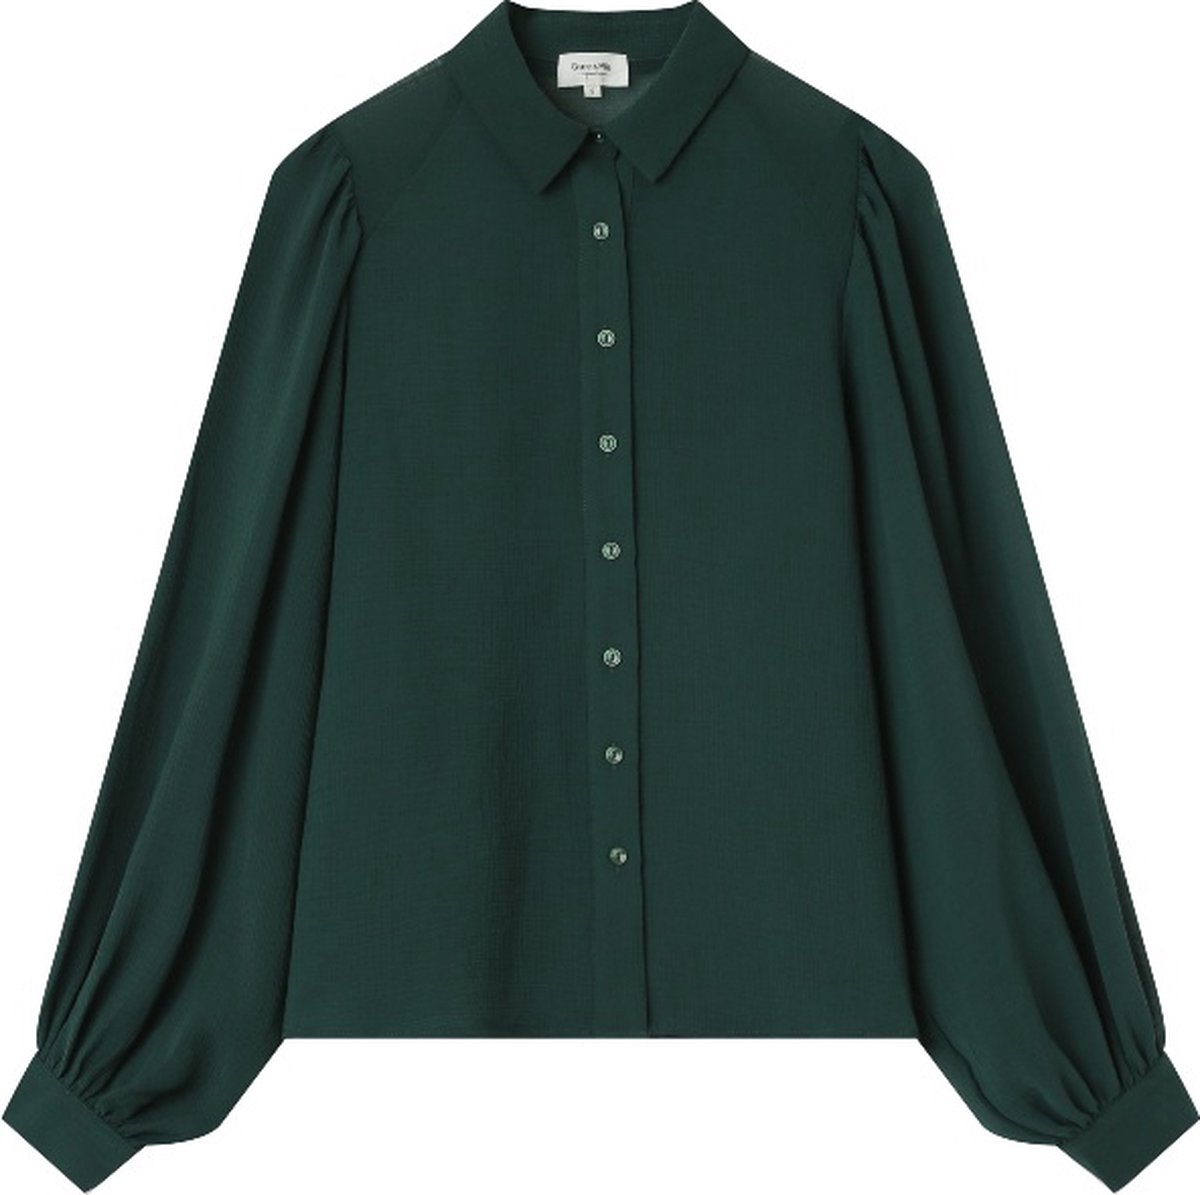 Groene chifon blouse Gora - Grace & Mila - Maat S